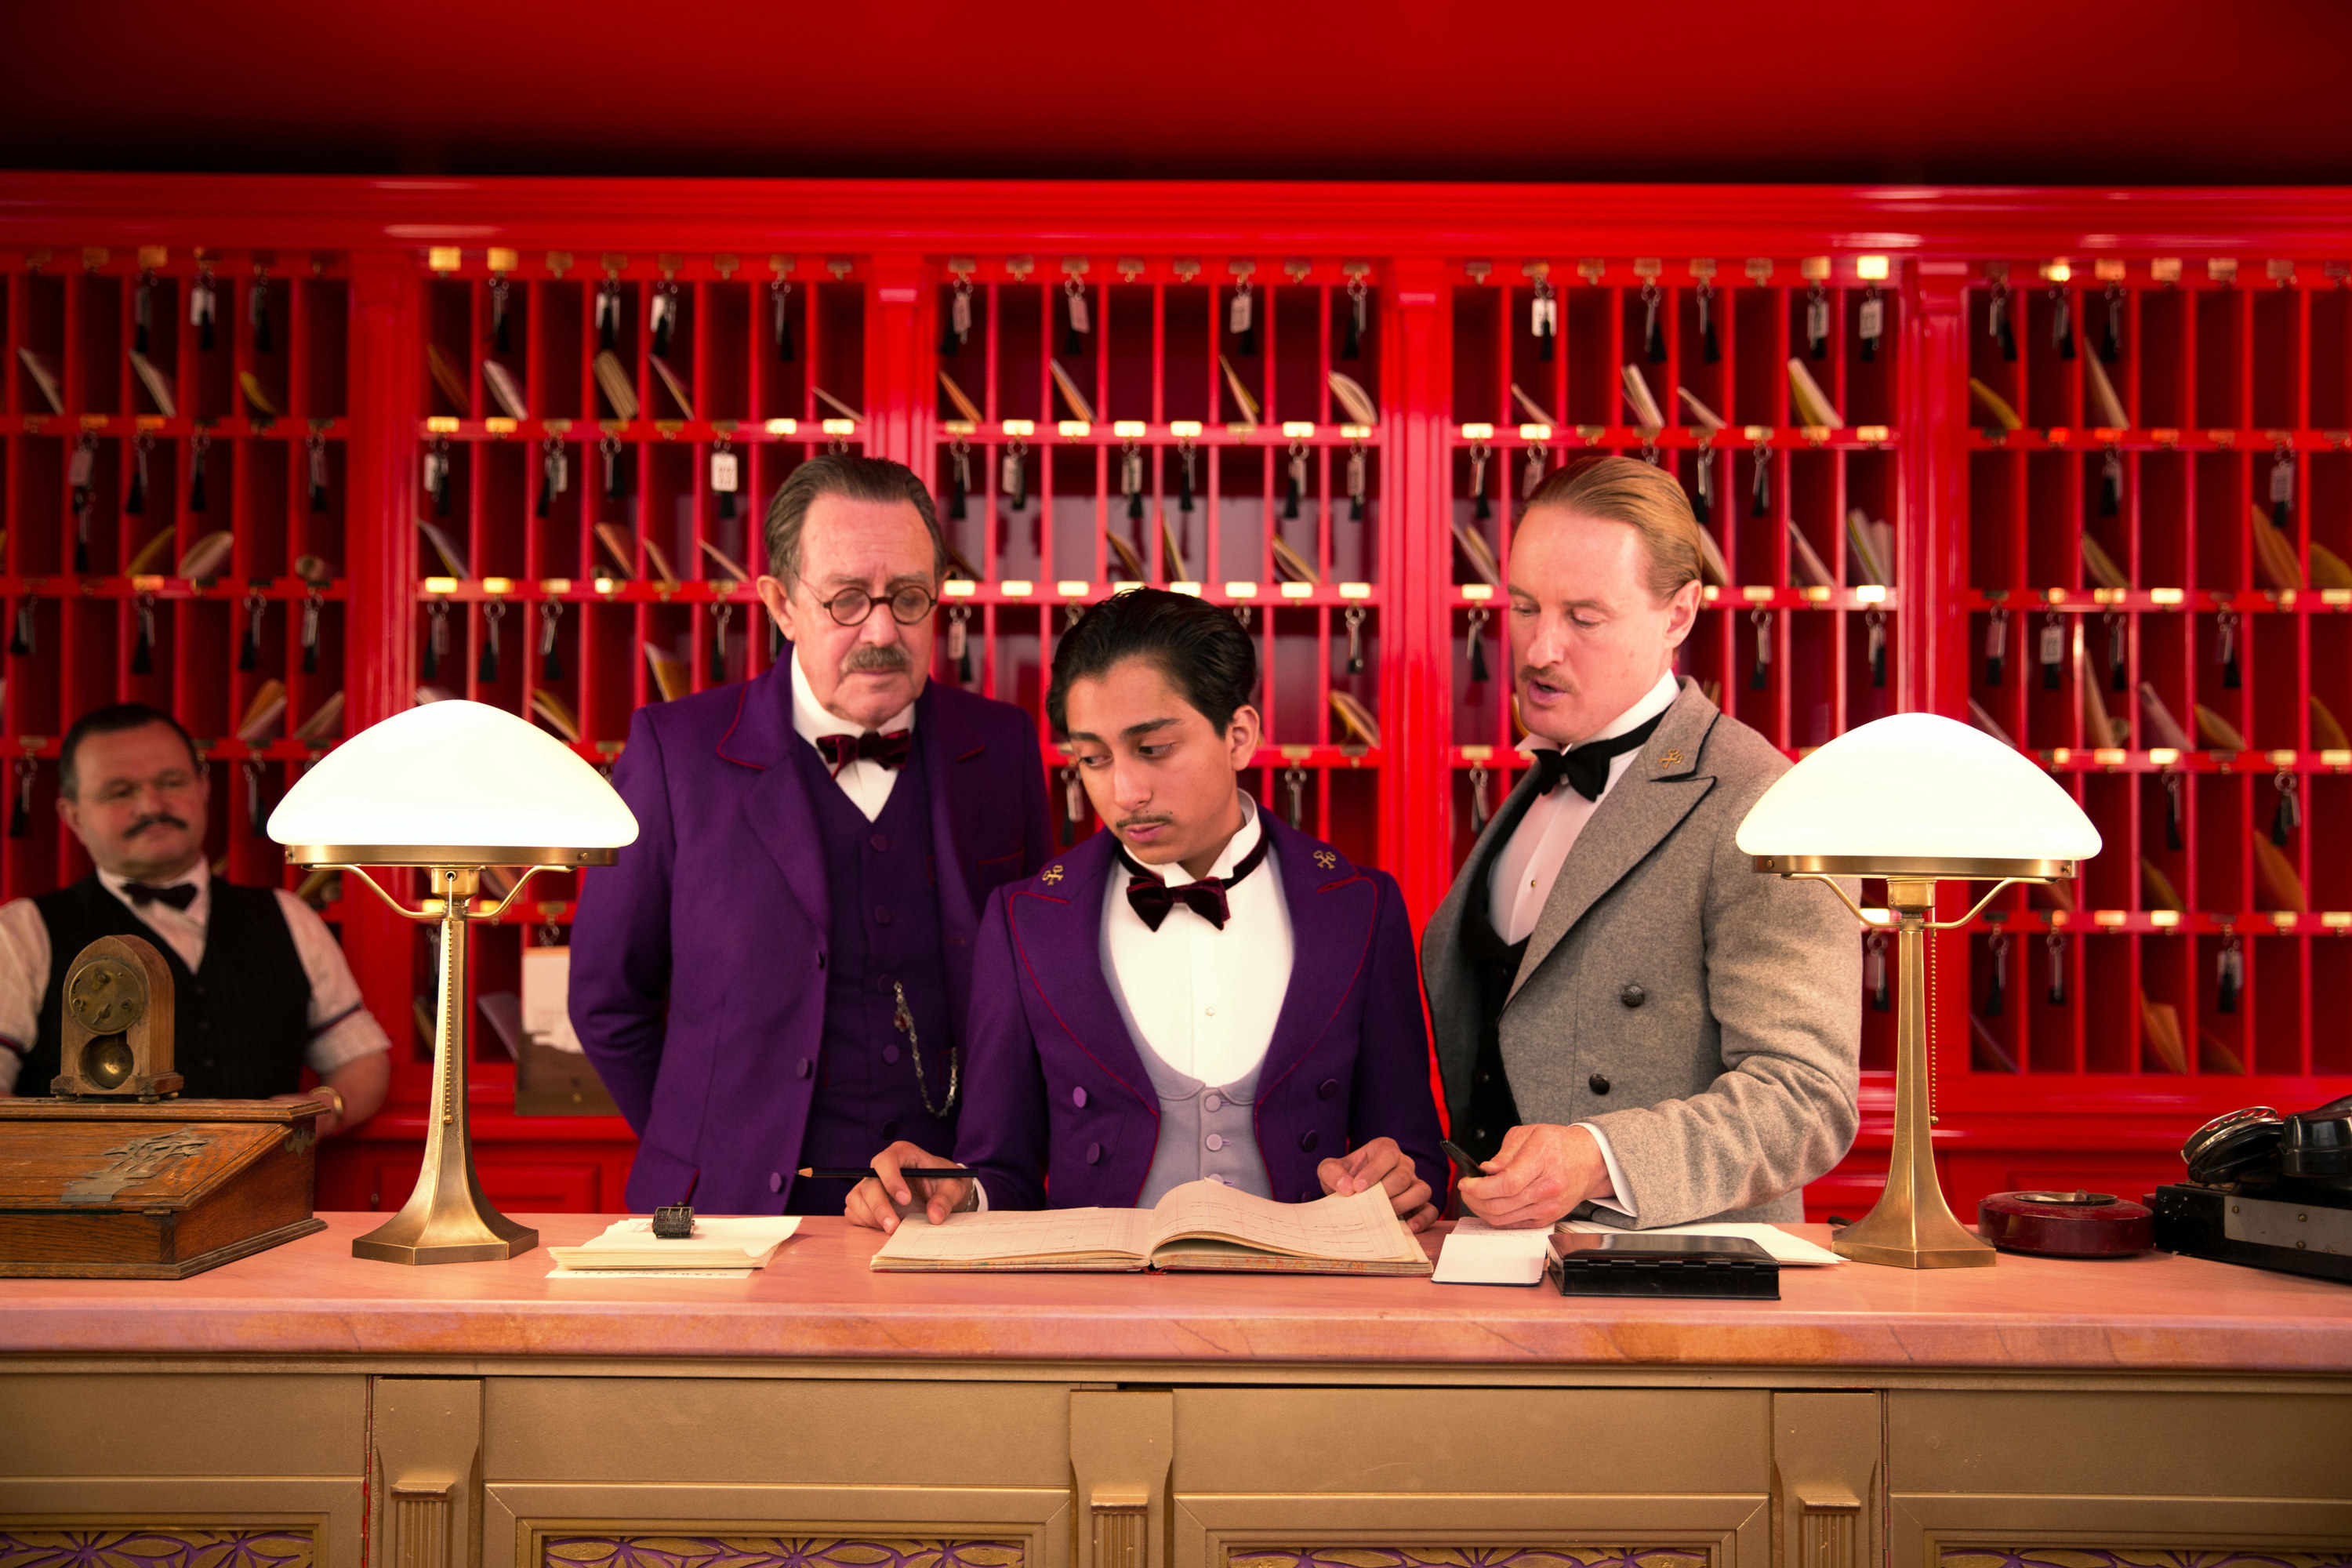 Tom Wilkinson, Tony Revolori and Owen Wilson in The Grand Budapest Hotel